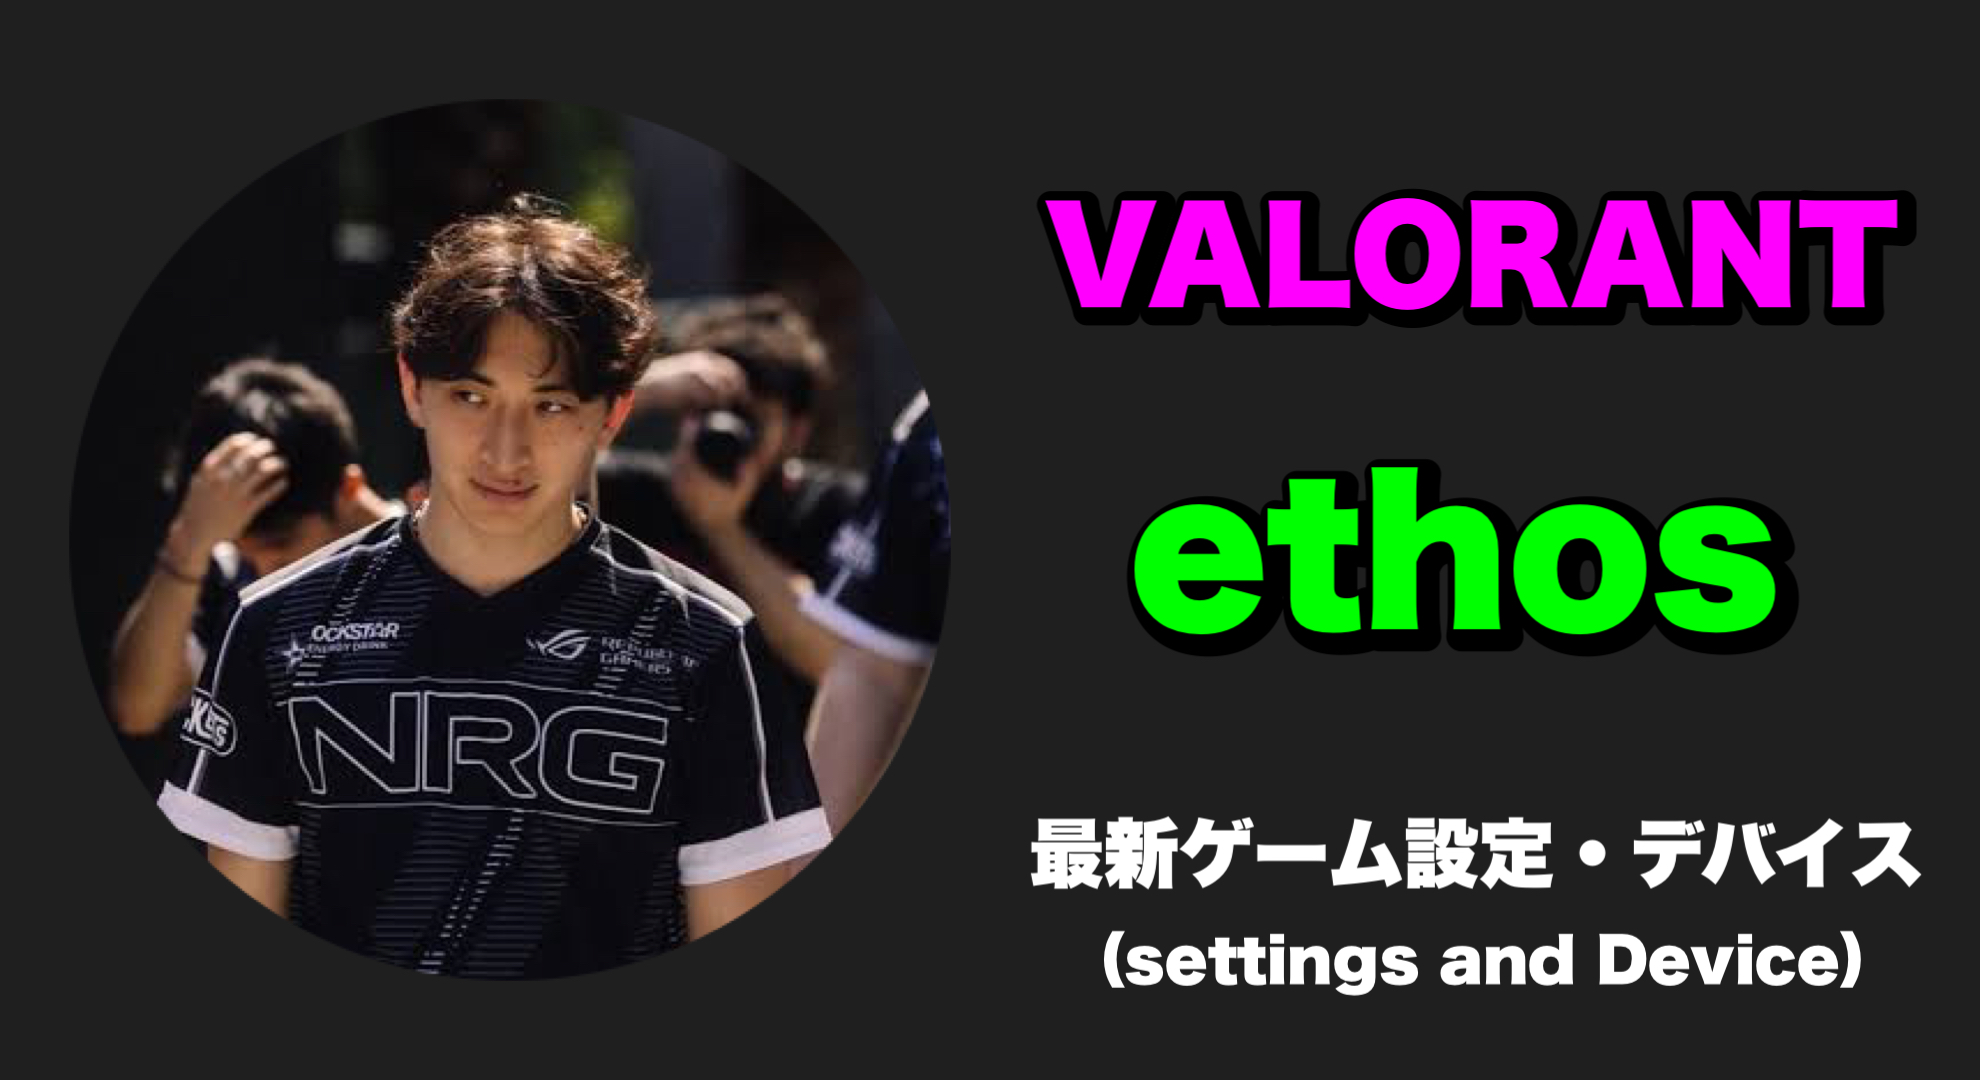 【VALORANT】ethos(エートス) 感度、キー配置、クロスヘア、設定、デバイス ethos sens ethos settings ethos crosshair ethos device